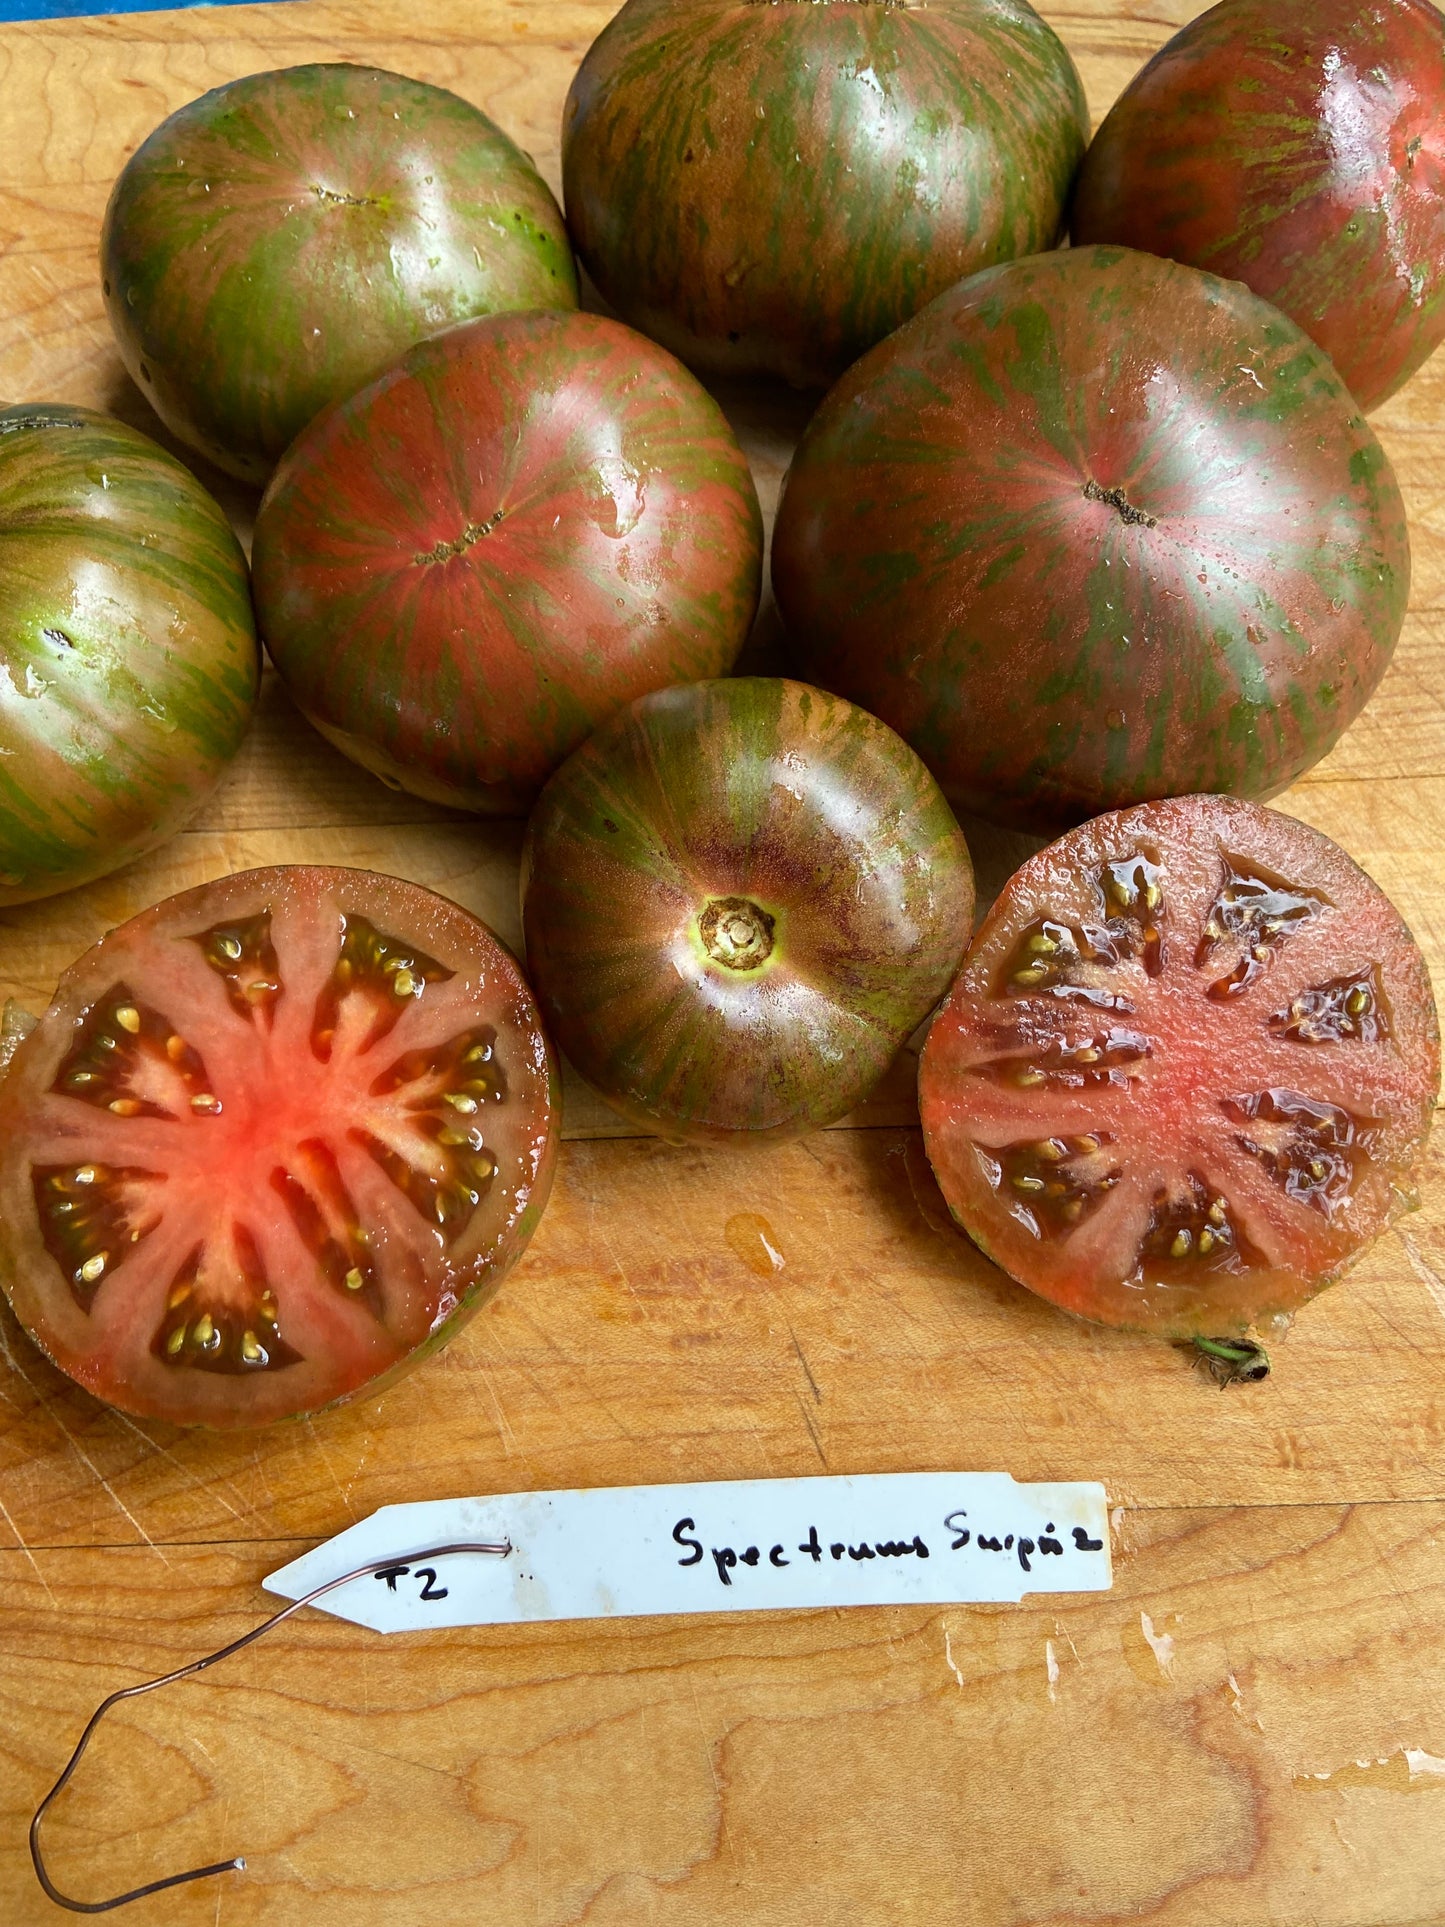 Spectrums Surpriz tomato